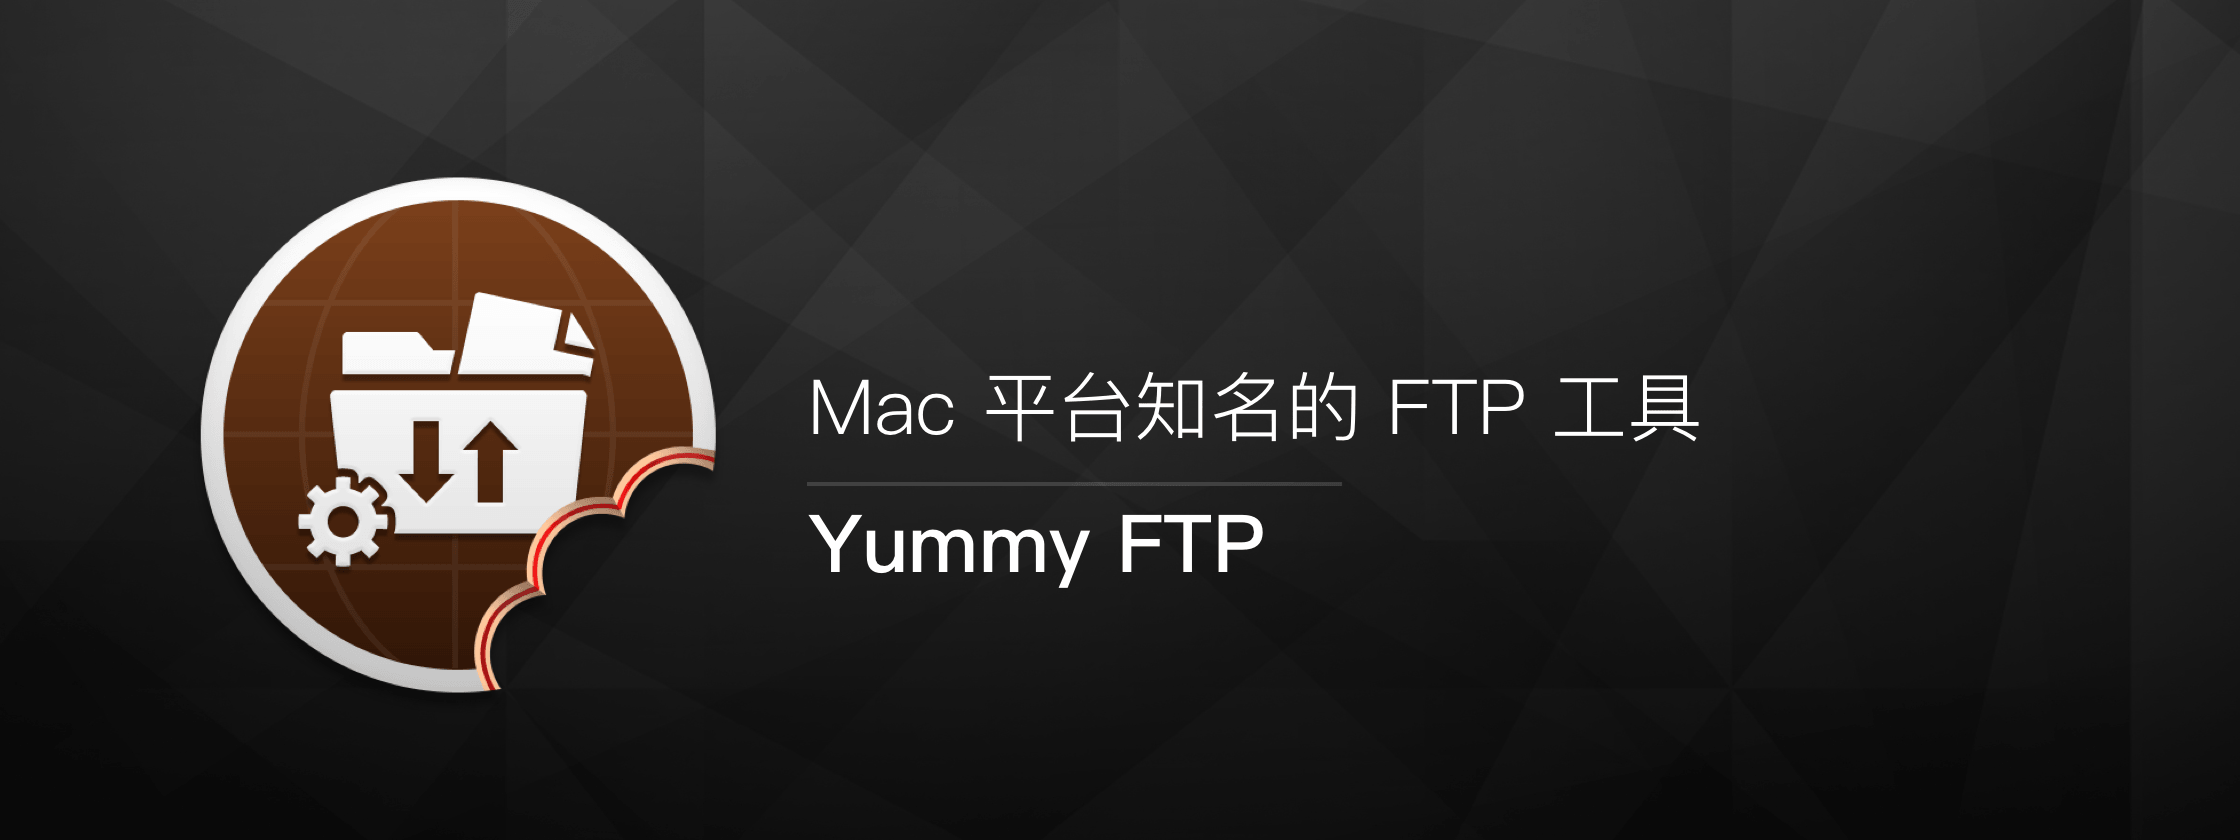 Yummy FTP – 可能是 Mac 最棒的 FTP 工具